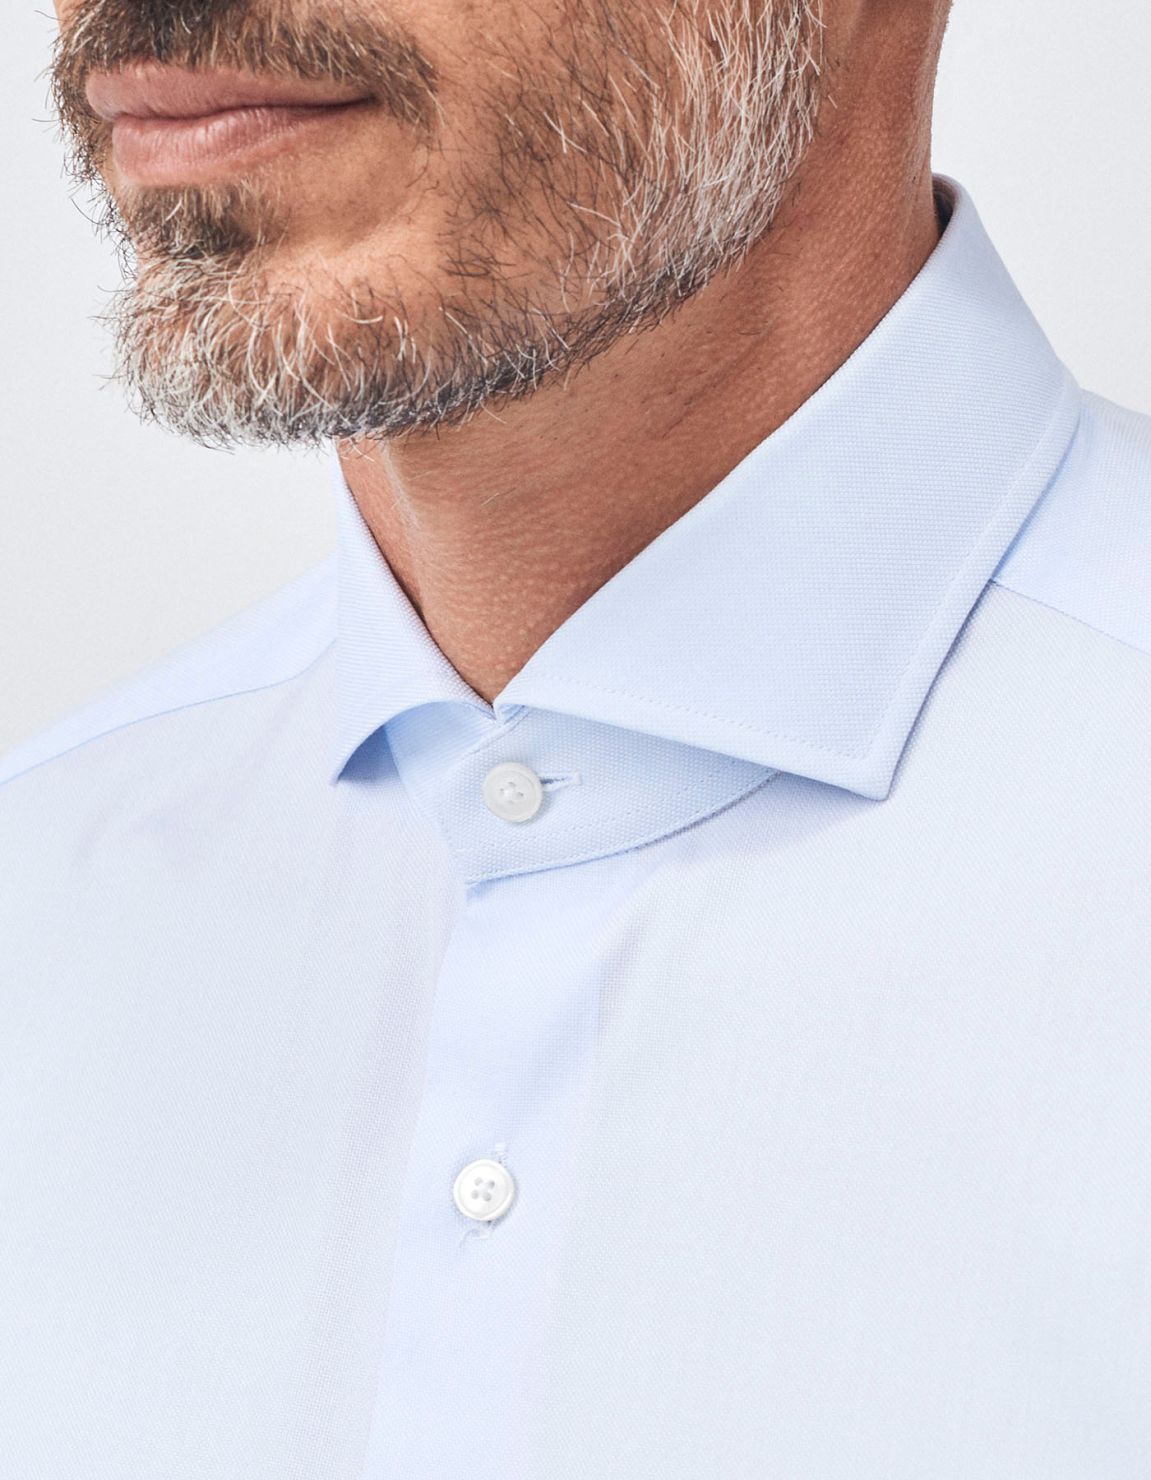 Shirt Collar cutaway Light Blue Oxford Slim Fit 3